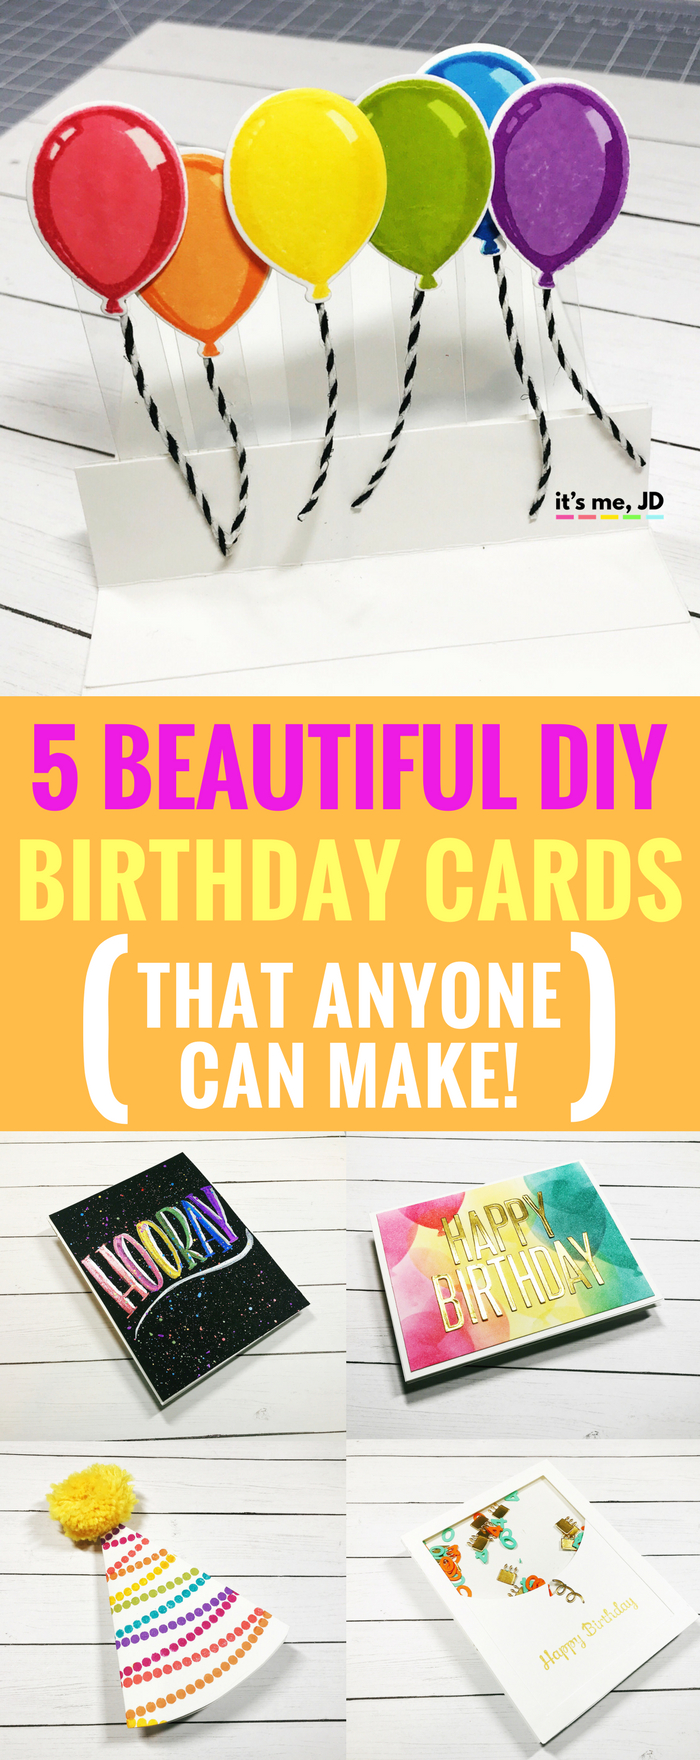 Happy Birthday Cards Homemade Ideas 5 Beautiful Diy Birthday Card Ideas That Anyone Can Make